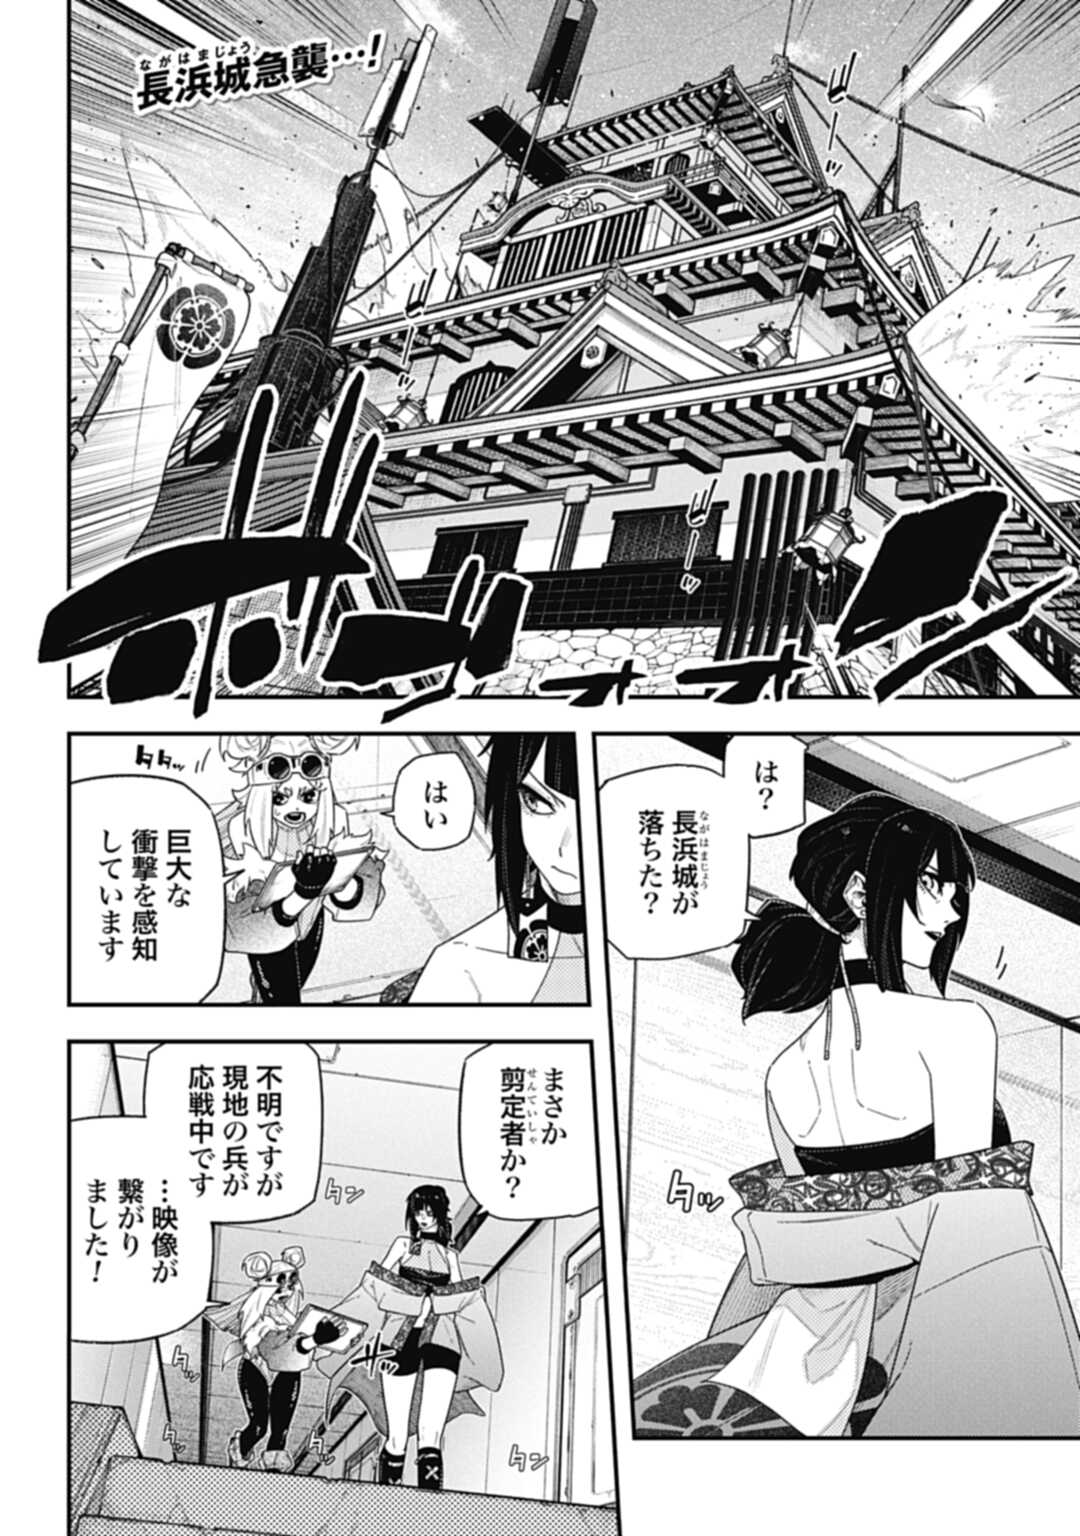 Nobunaga Multiverse - Chapter 11 - Page 2